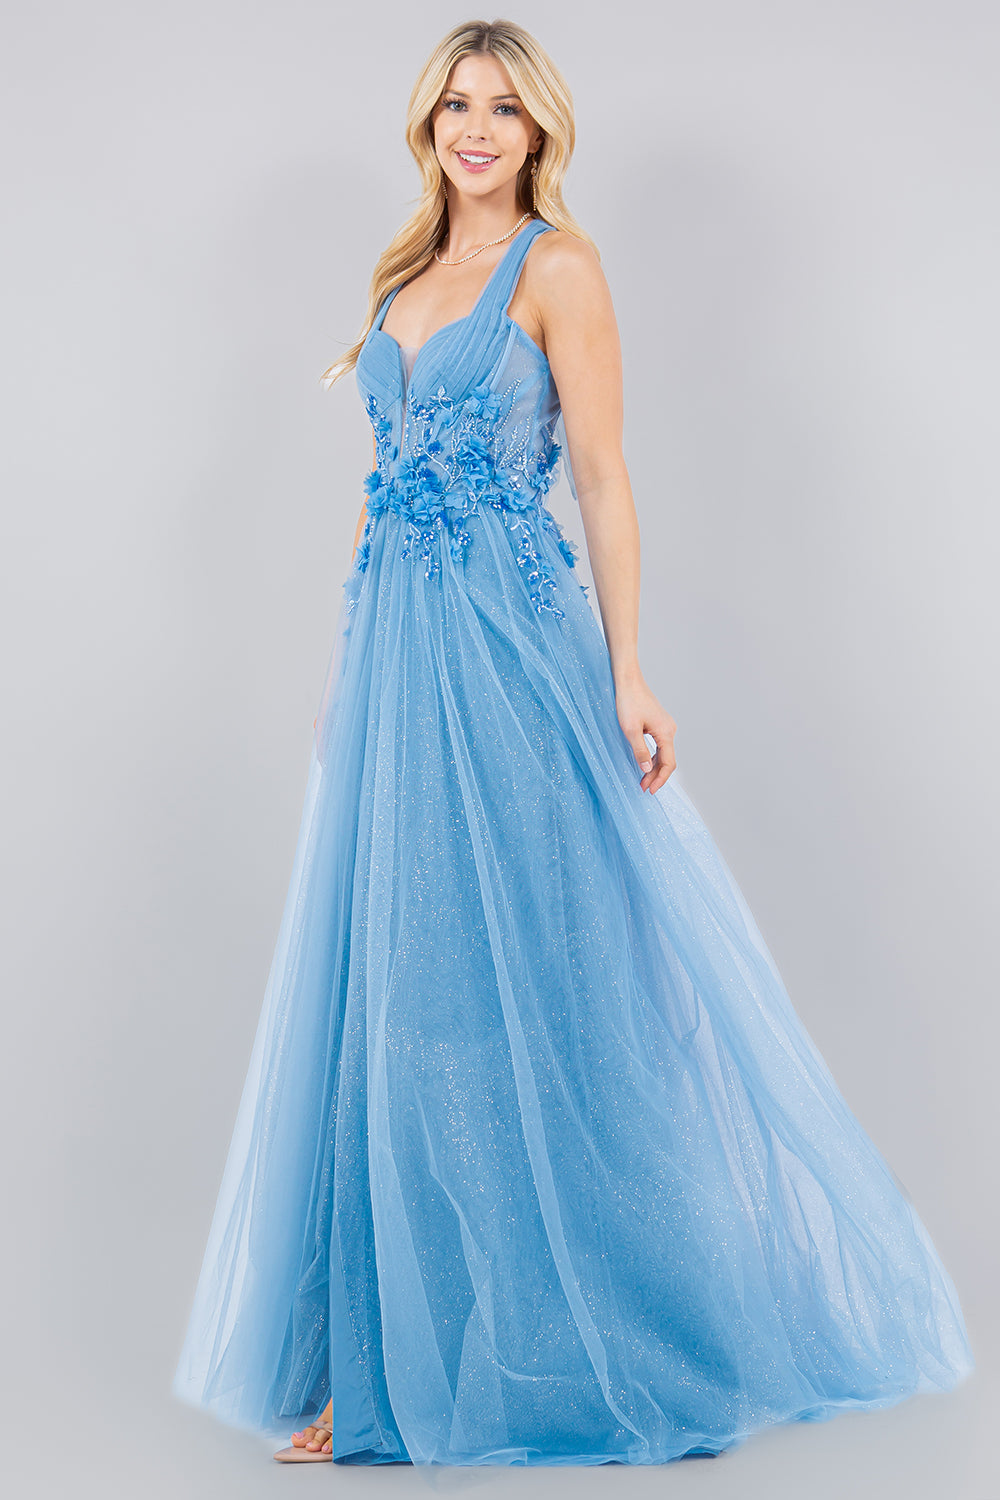 3D Floral Halter A-line Slit Gown by Cinderella Couture 8076J